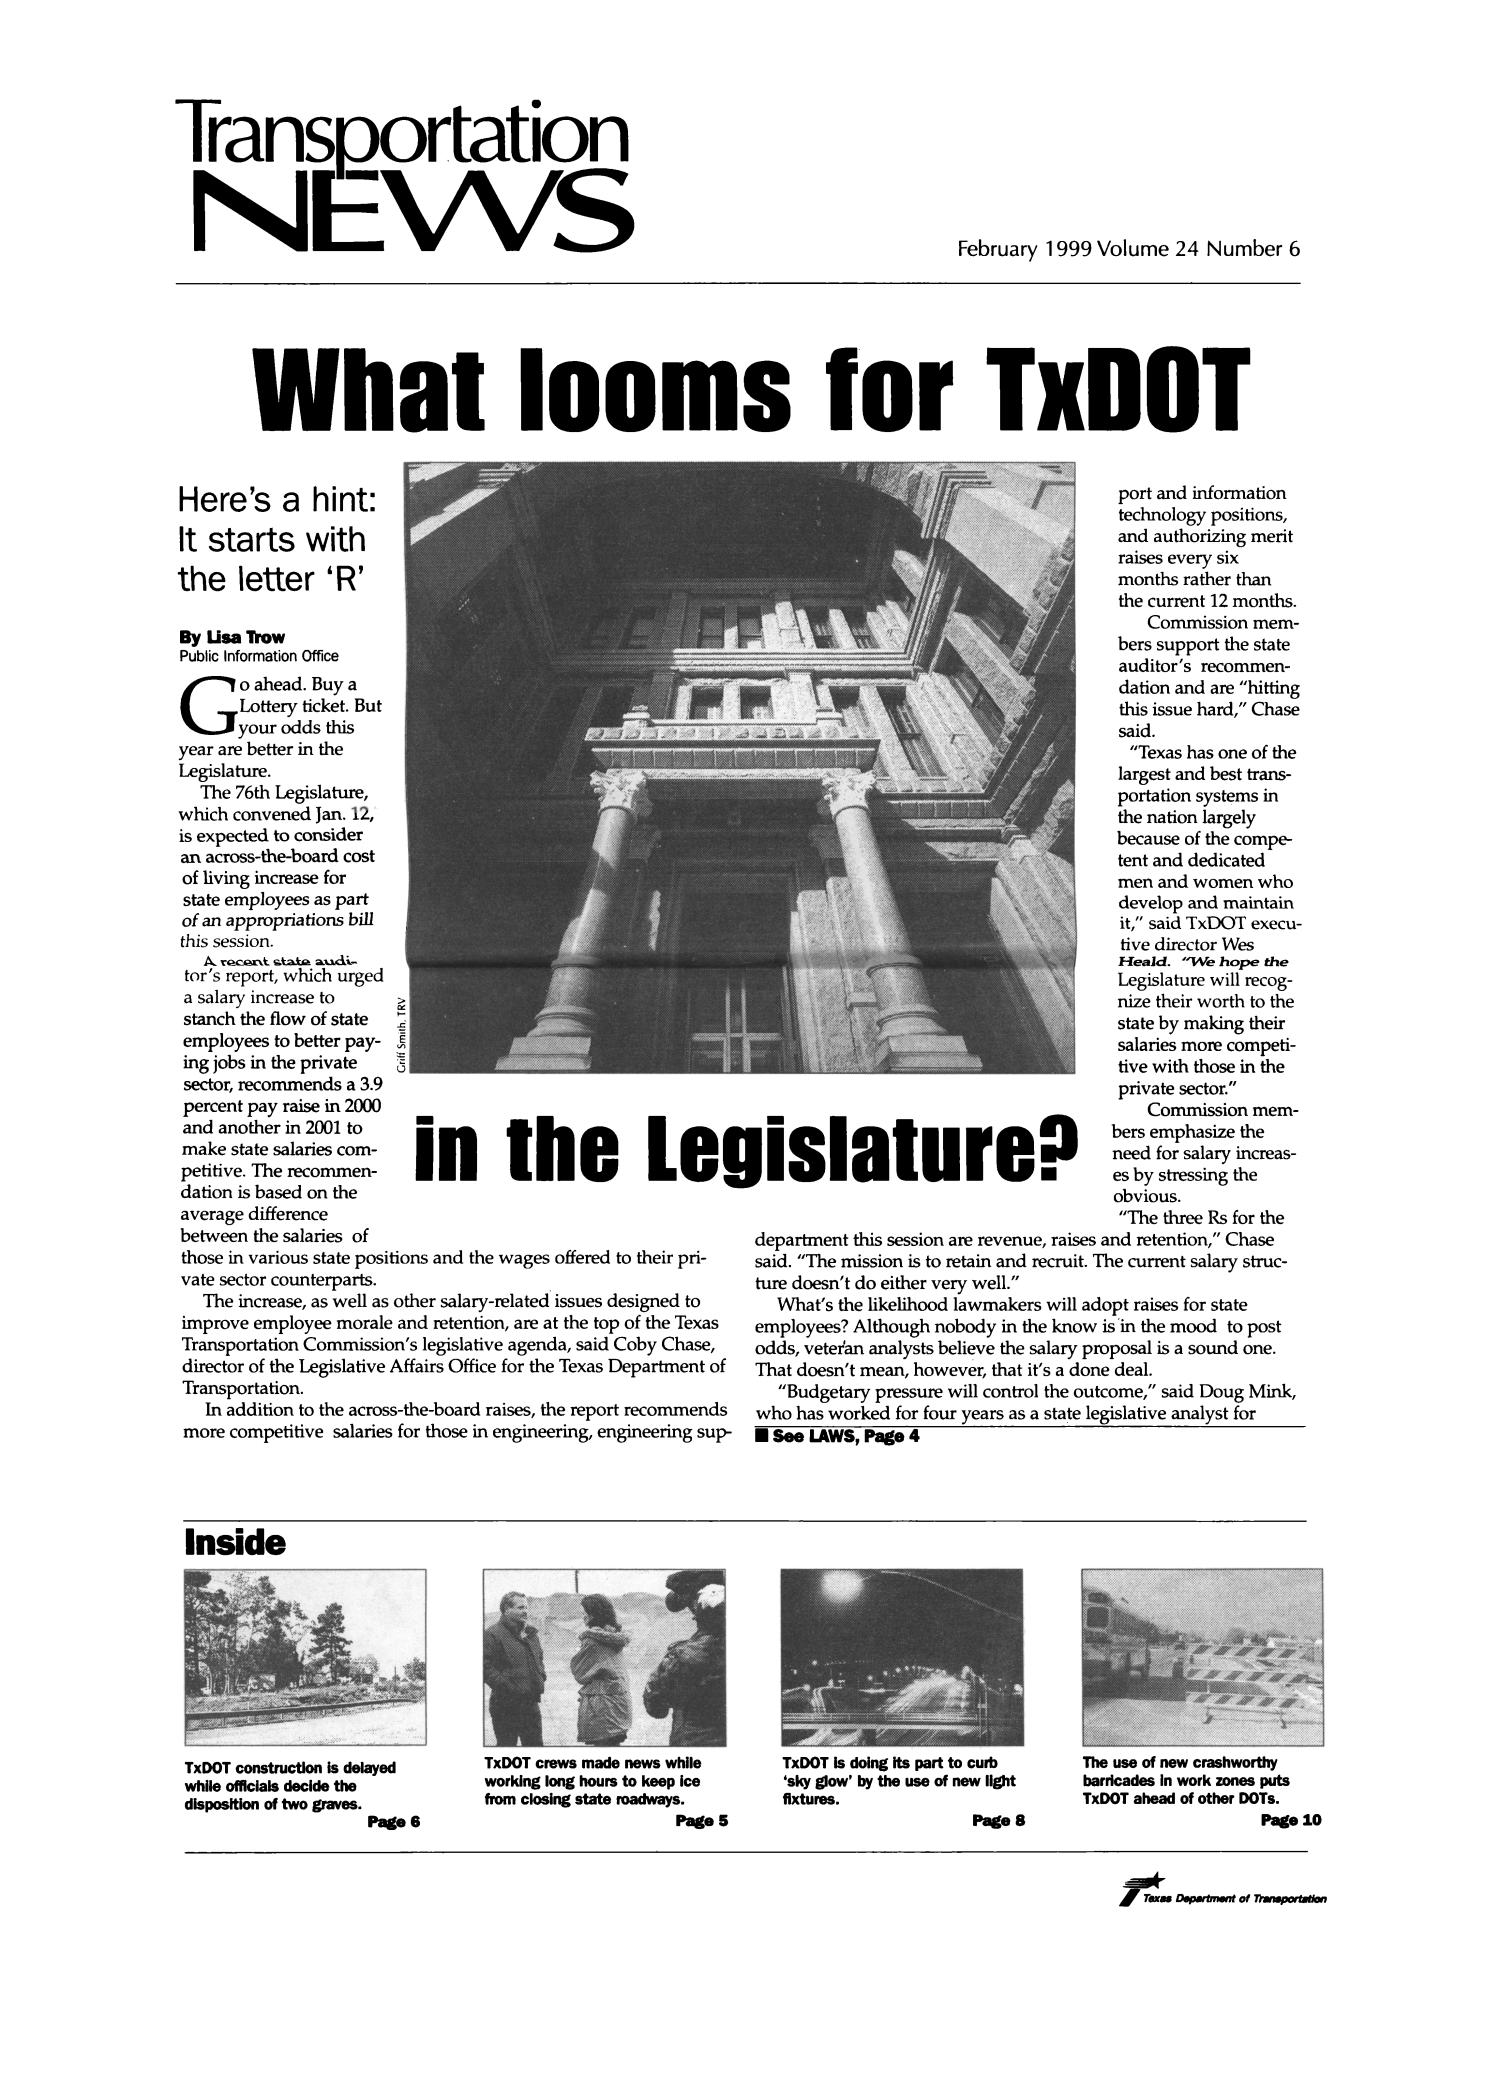 Transportation News, Volume 24, Number 6, February 1999
                                                
                                                    1
                                                